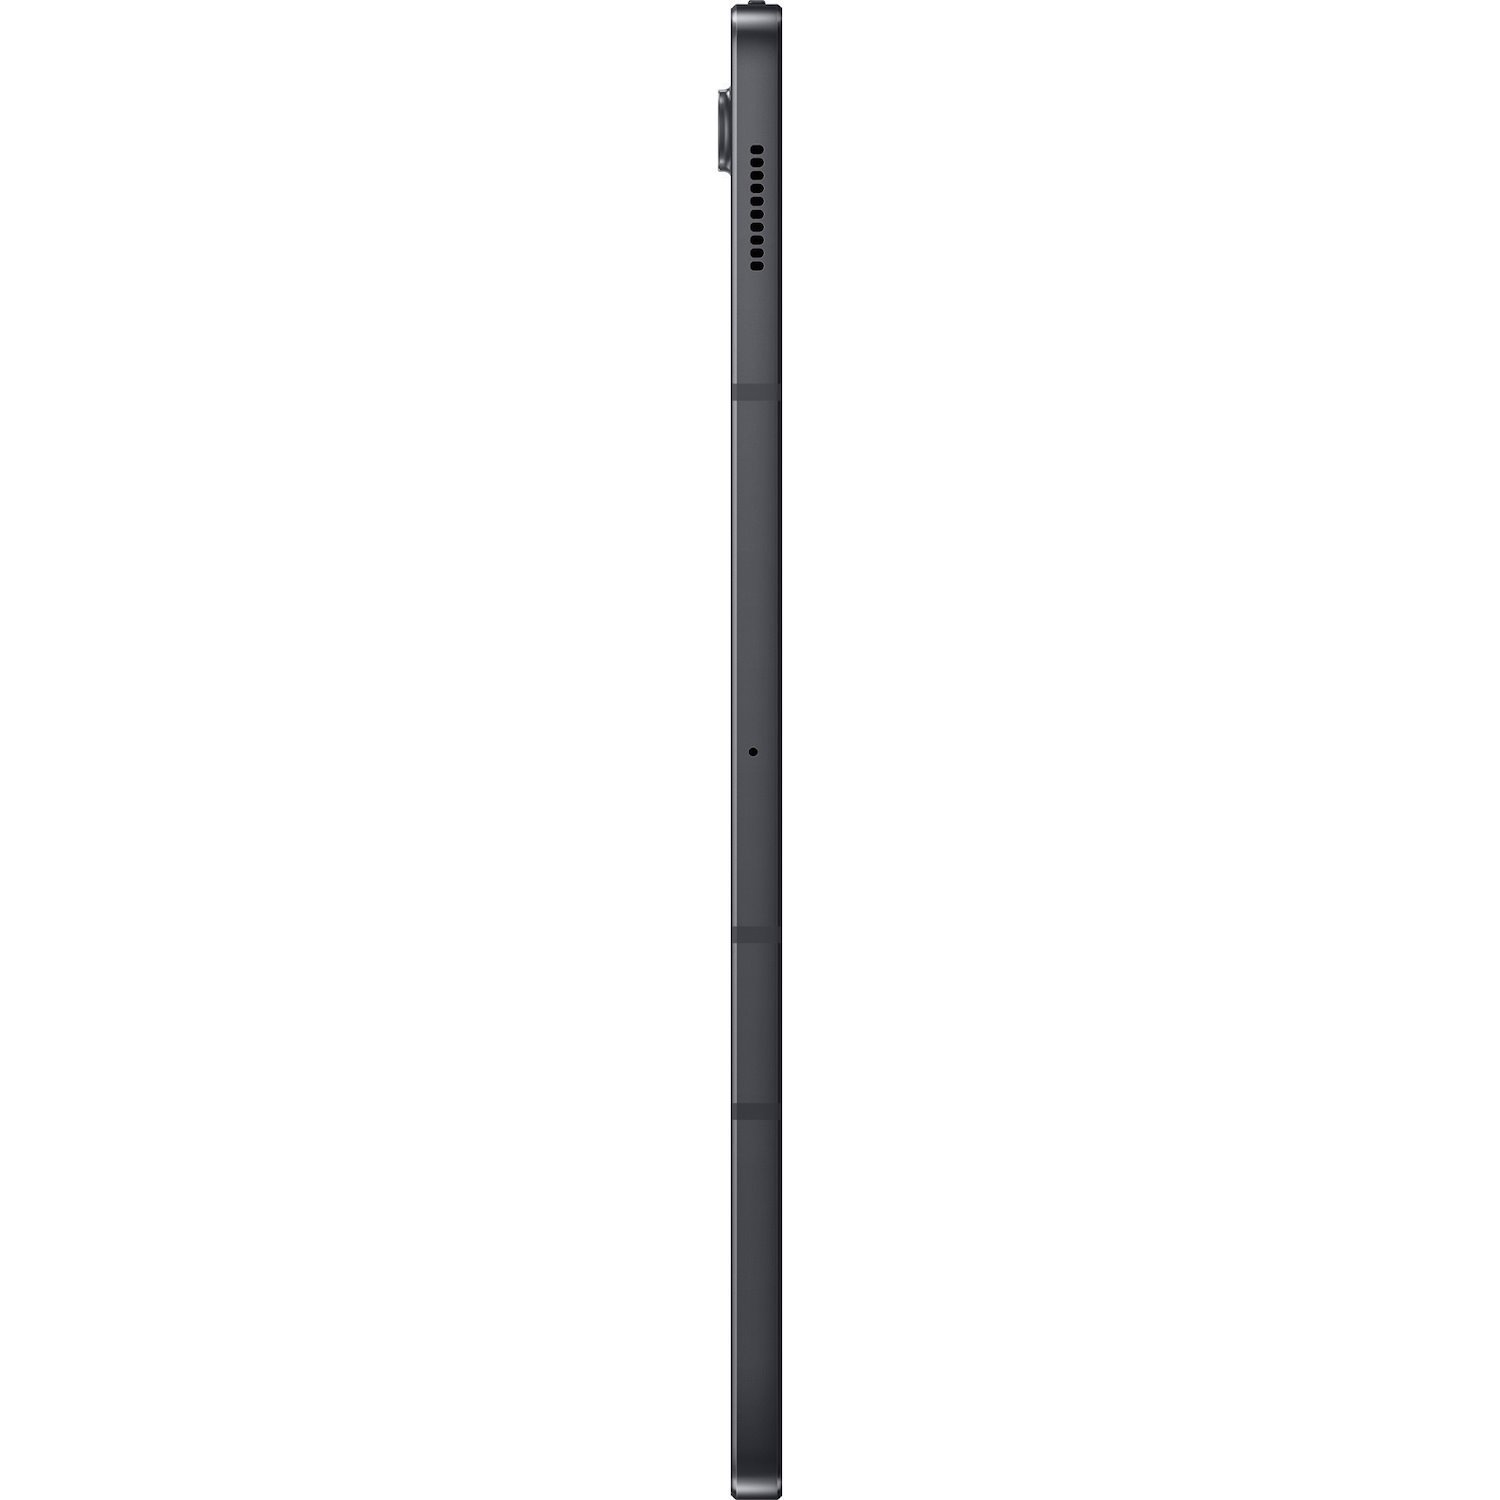 Samsung Galaxy Tab S7 FE SM-T733 Tablet - 12.4" WQXGA - Qualcomm SM7325 Snapdragon 778G 5G Octa-core - 4 GB - 64 GB Storage - Android 11 - Mystic Black